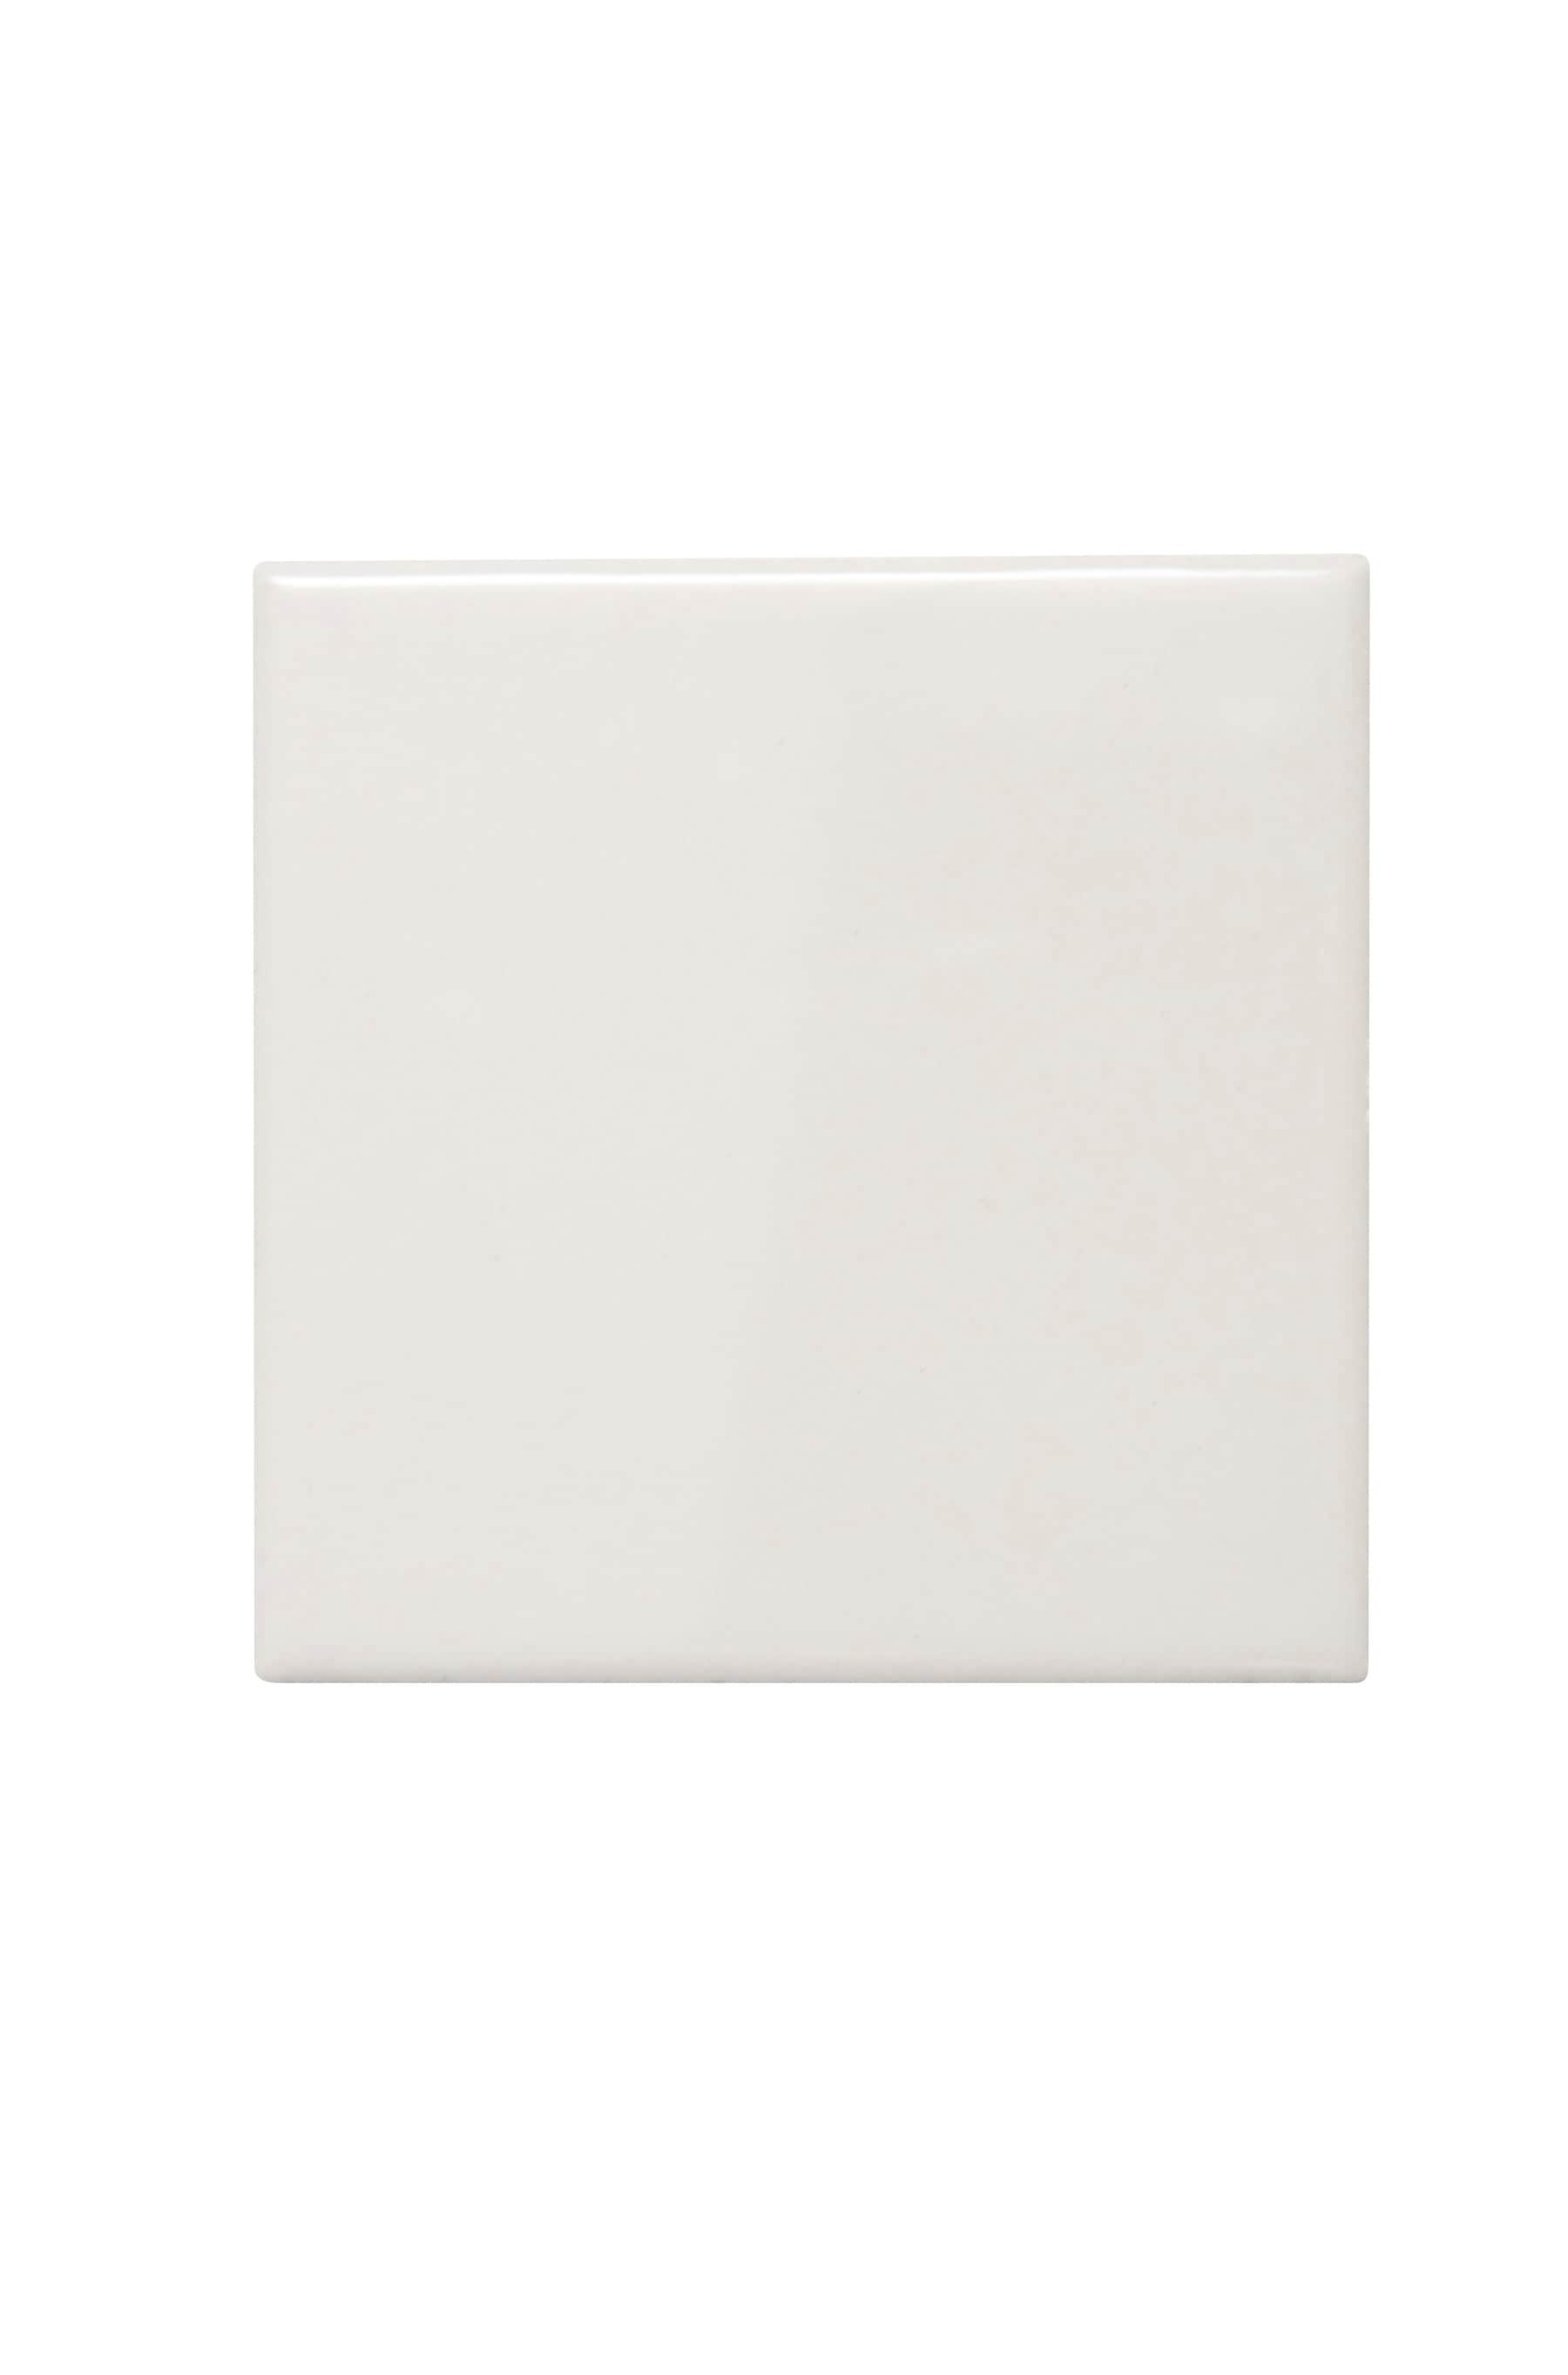 4 in Black Ceramic Tile 4.25 inch Shower Bathroom Kitchen Backsplash  American Olean Gloss 4 1/4 Box 10 Piece